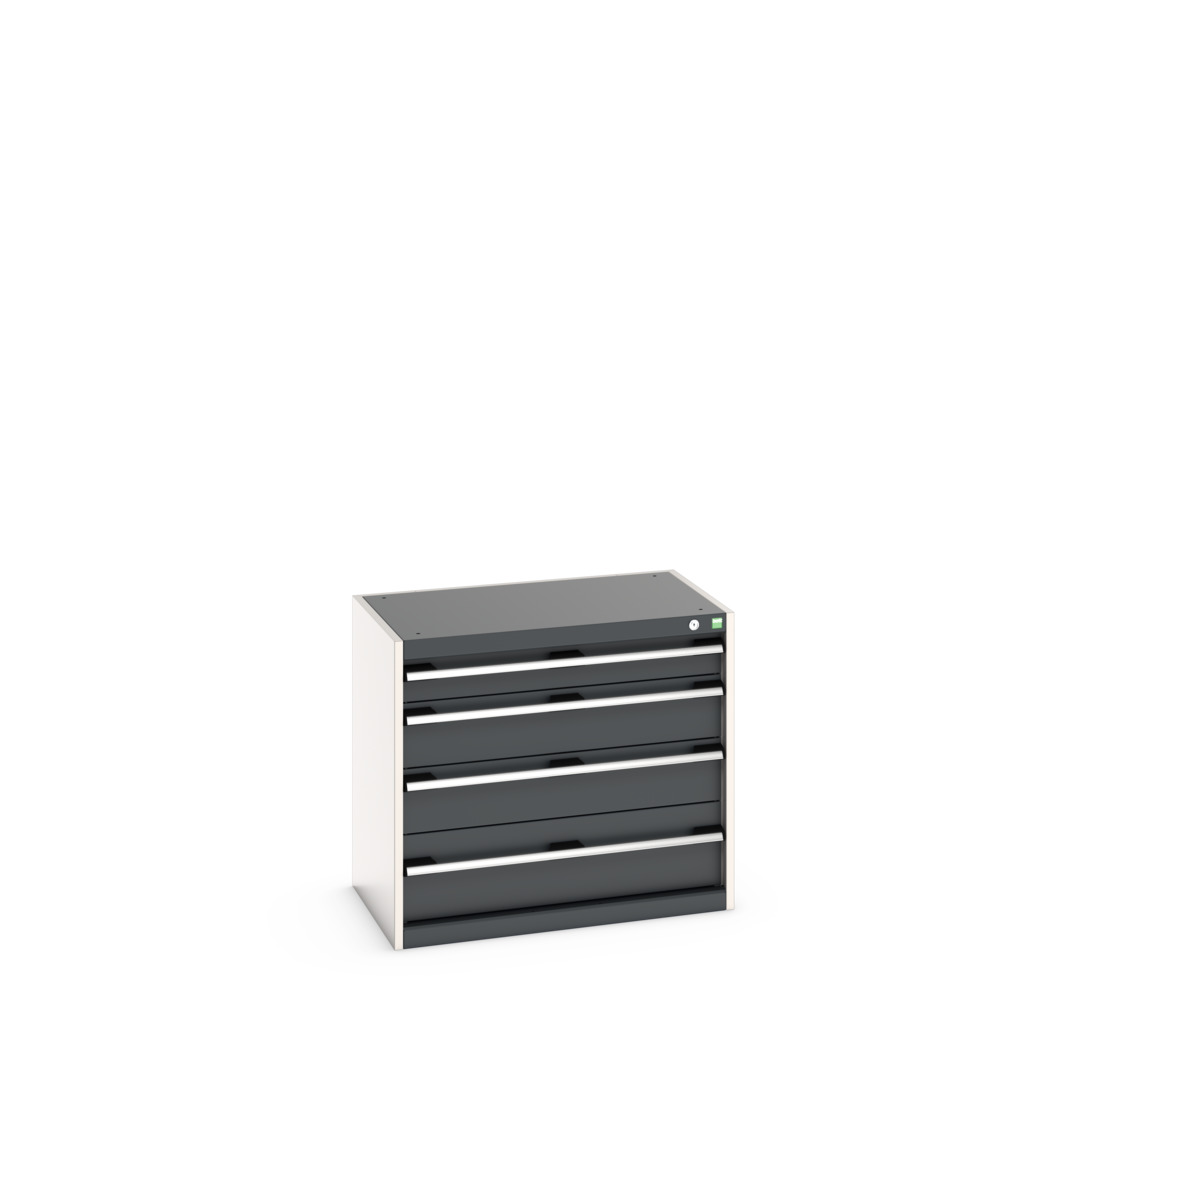 40012011. - cubio drawer cabinet